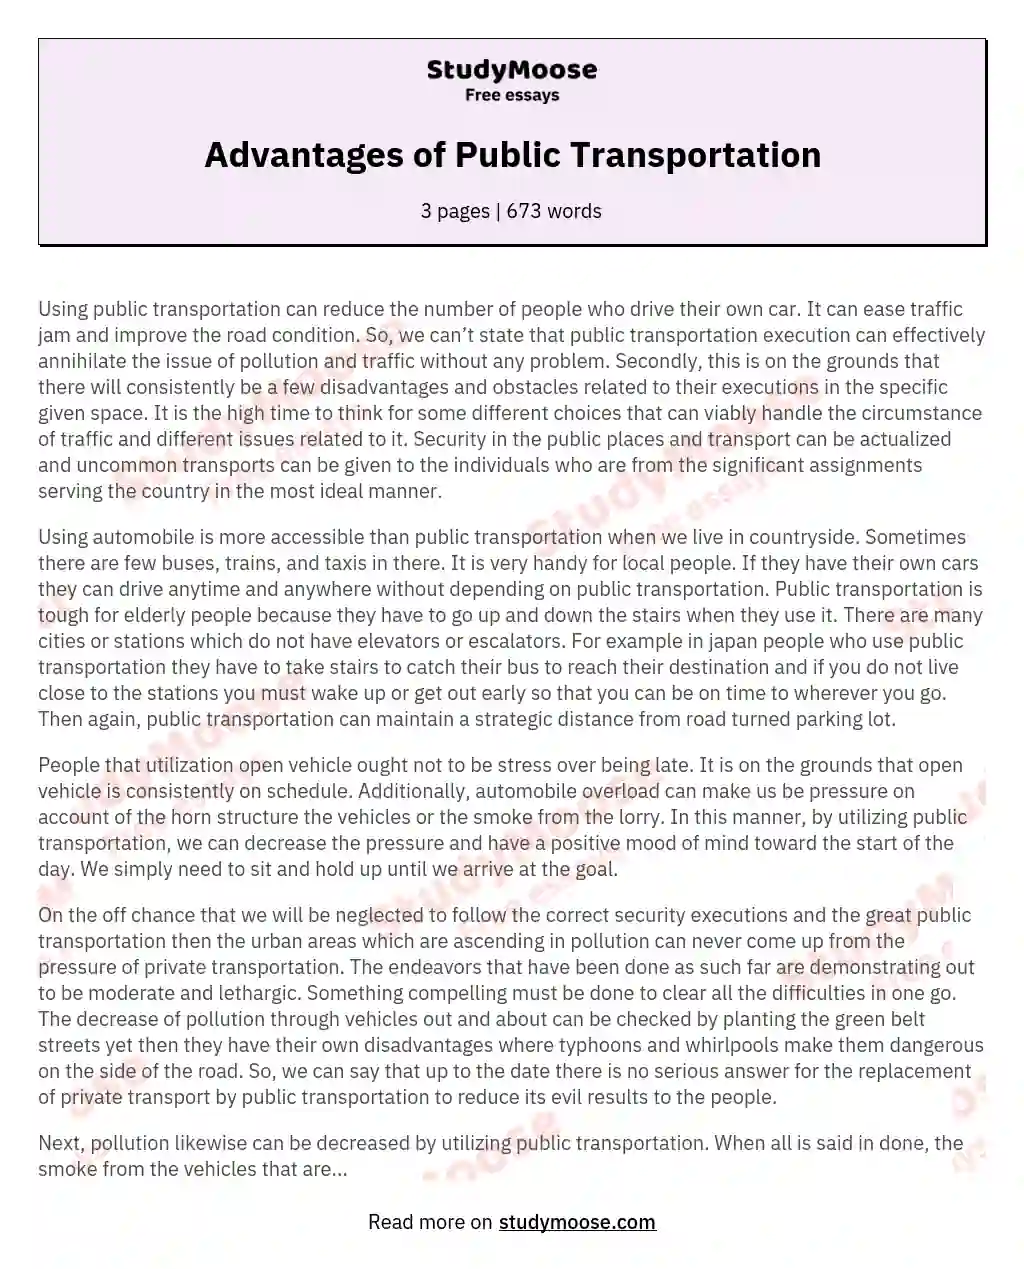 using public transport essay